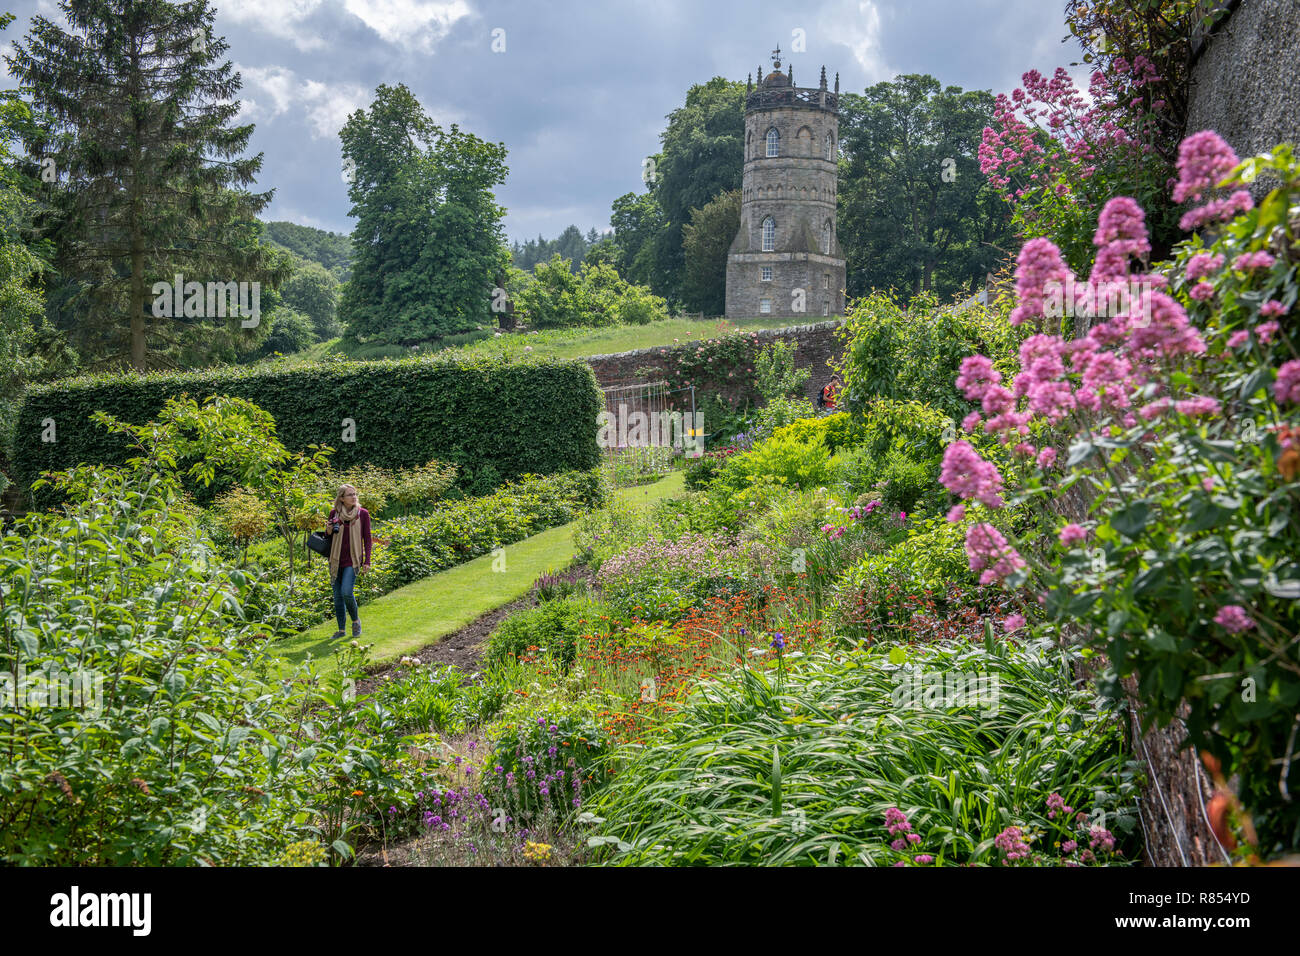 A tourist walks through the colorful grounds of Kiplin Hall, Richmond, Yorkshire , UK Stock Photo